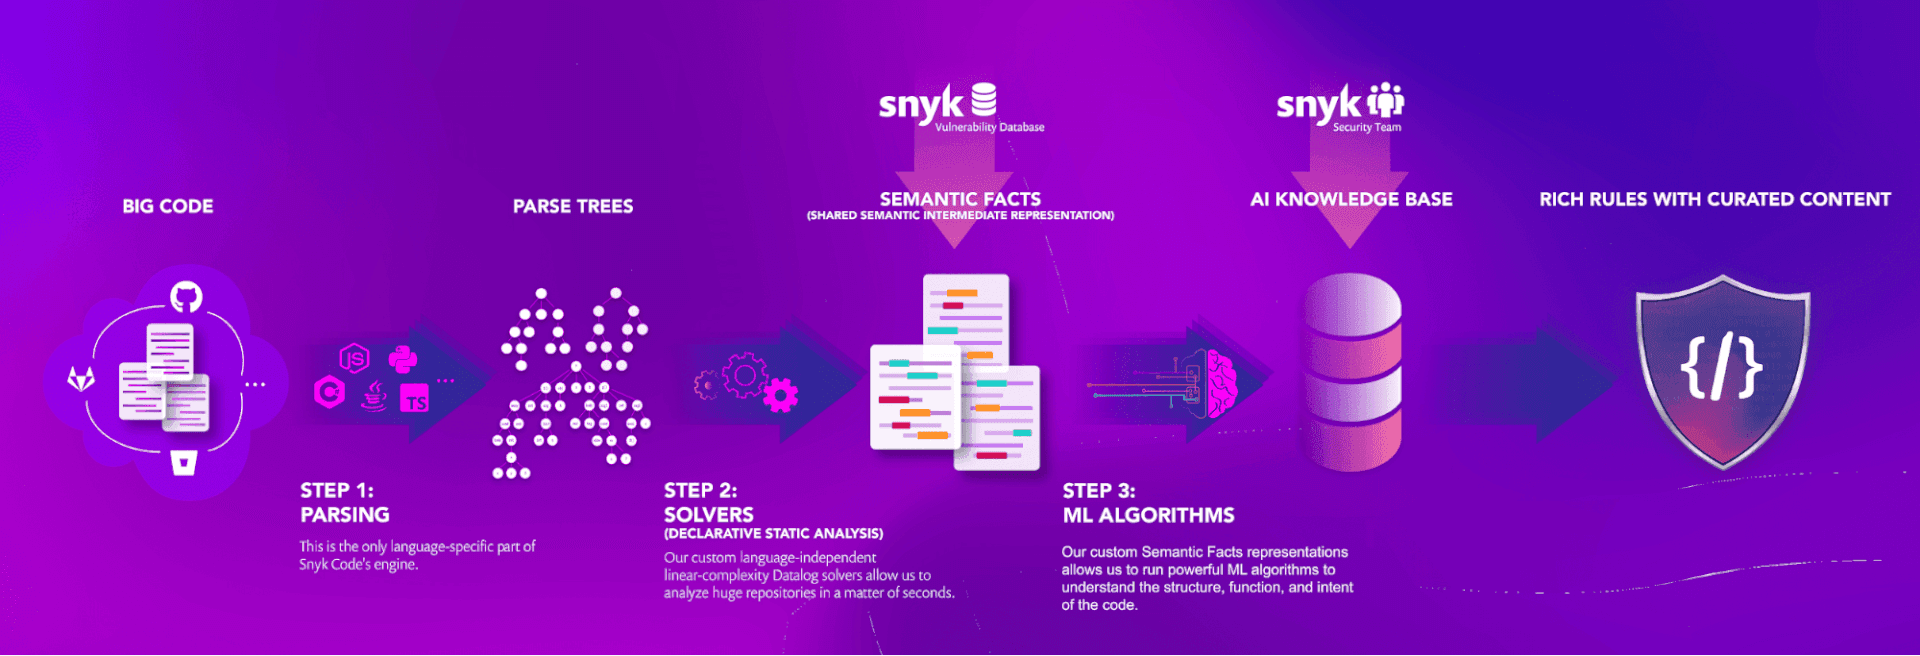 wordpress-sync/blog-snyk-code-tech-workflow